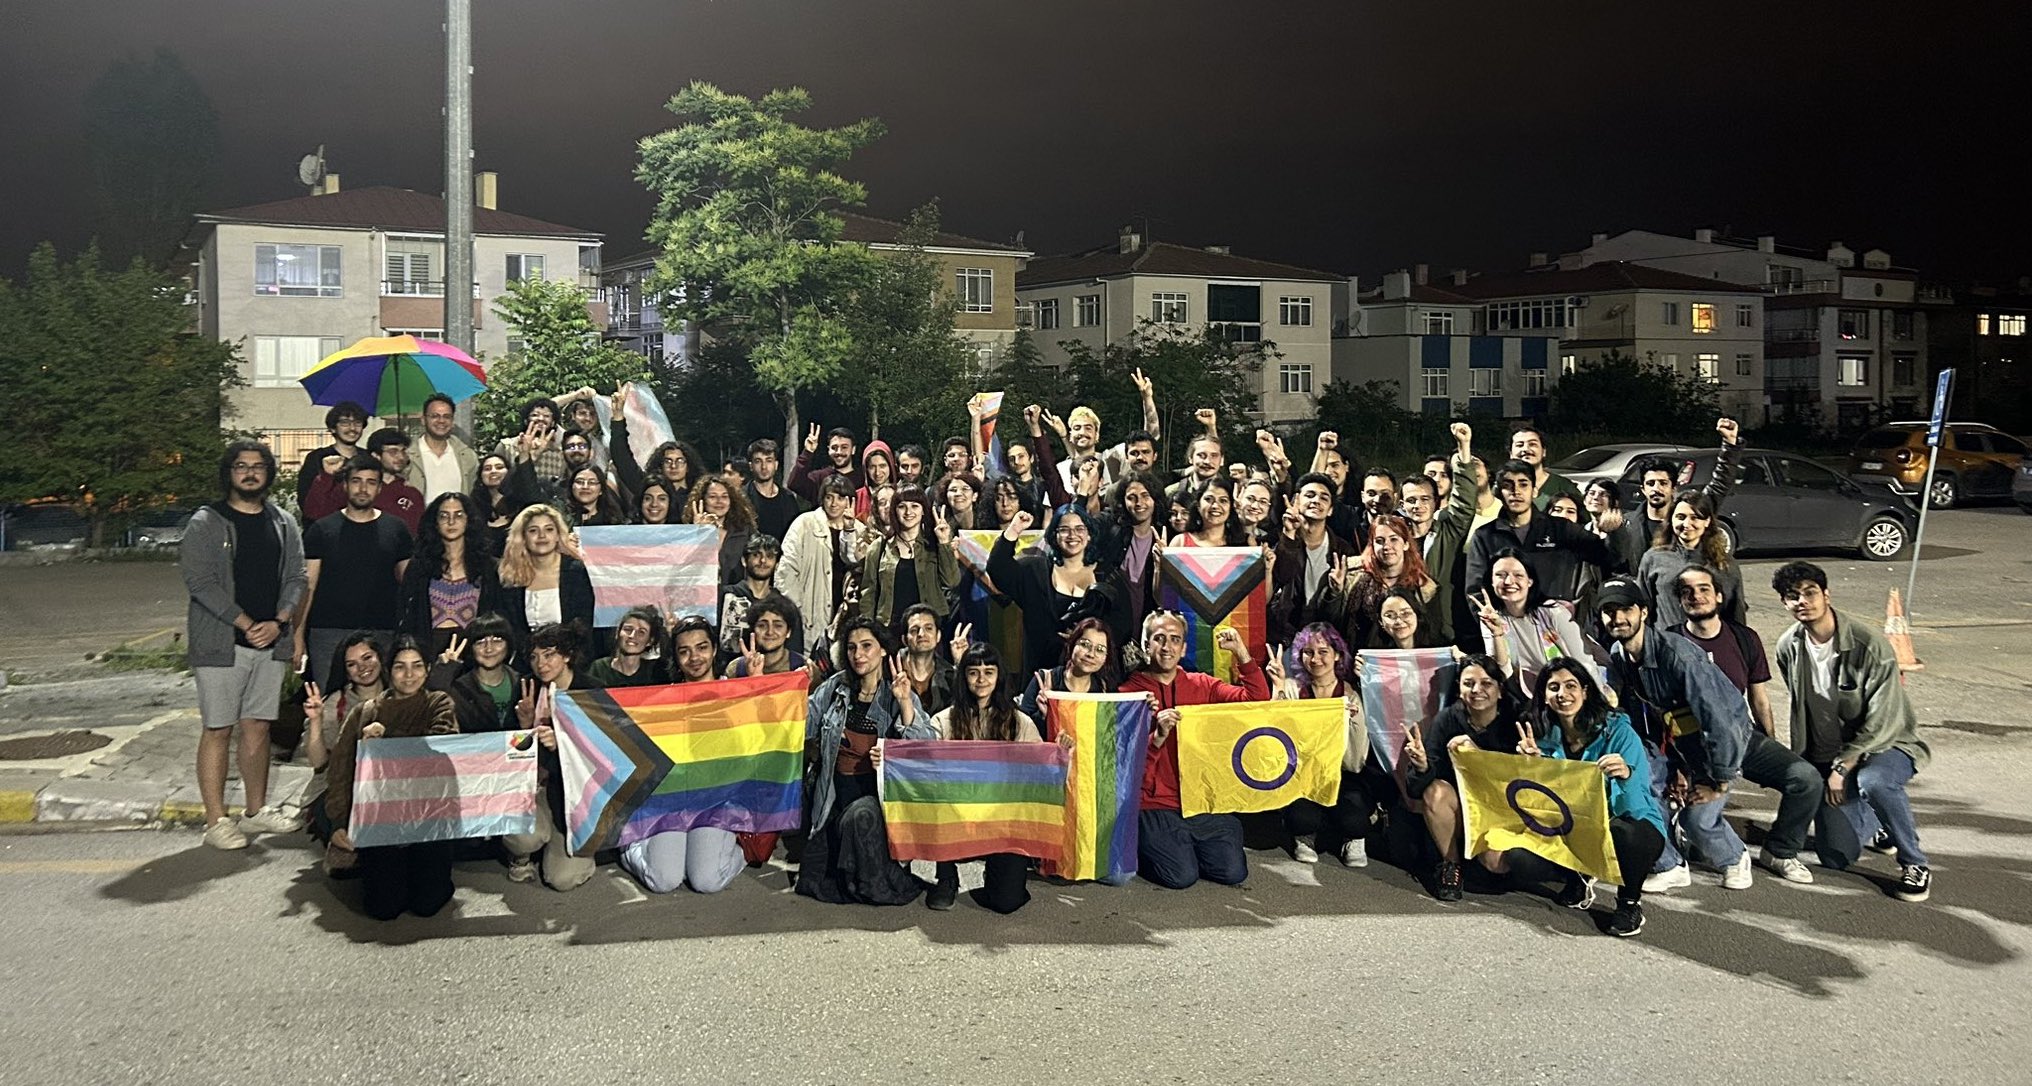 METU students defended their pride! Kaos GL - News Portal for LGBTI+